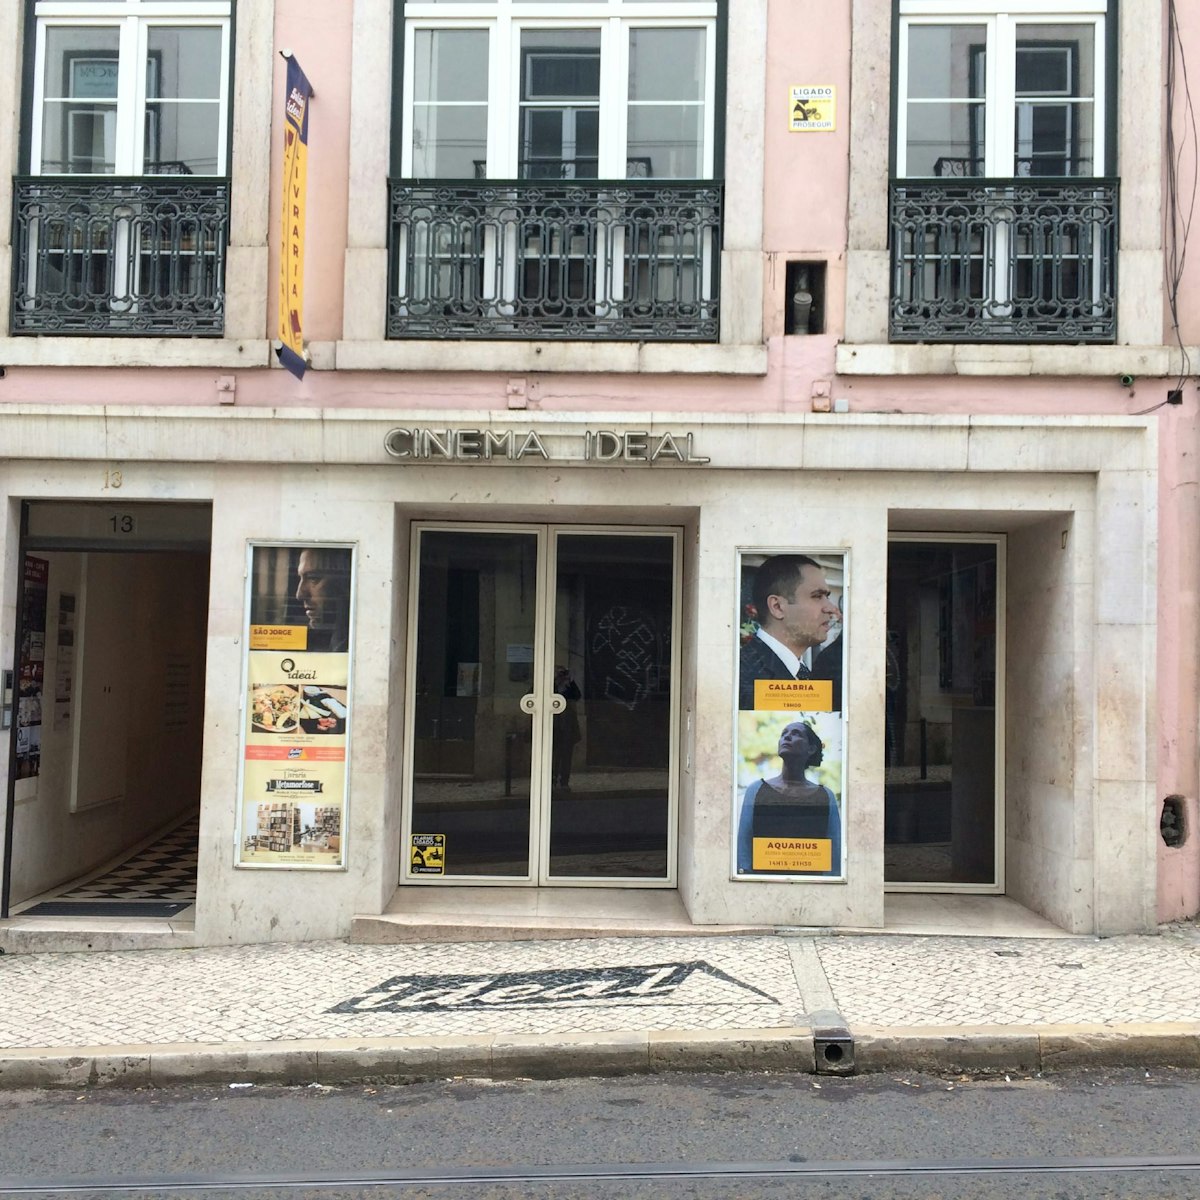 Cinema Ideal in Lisbon